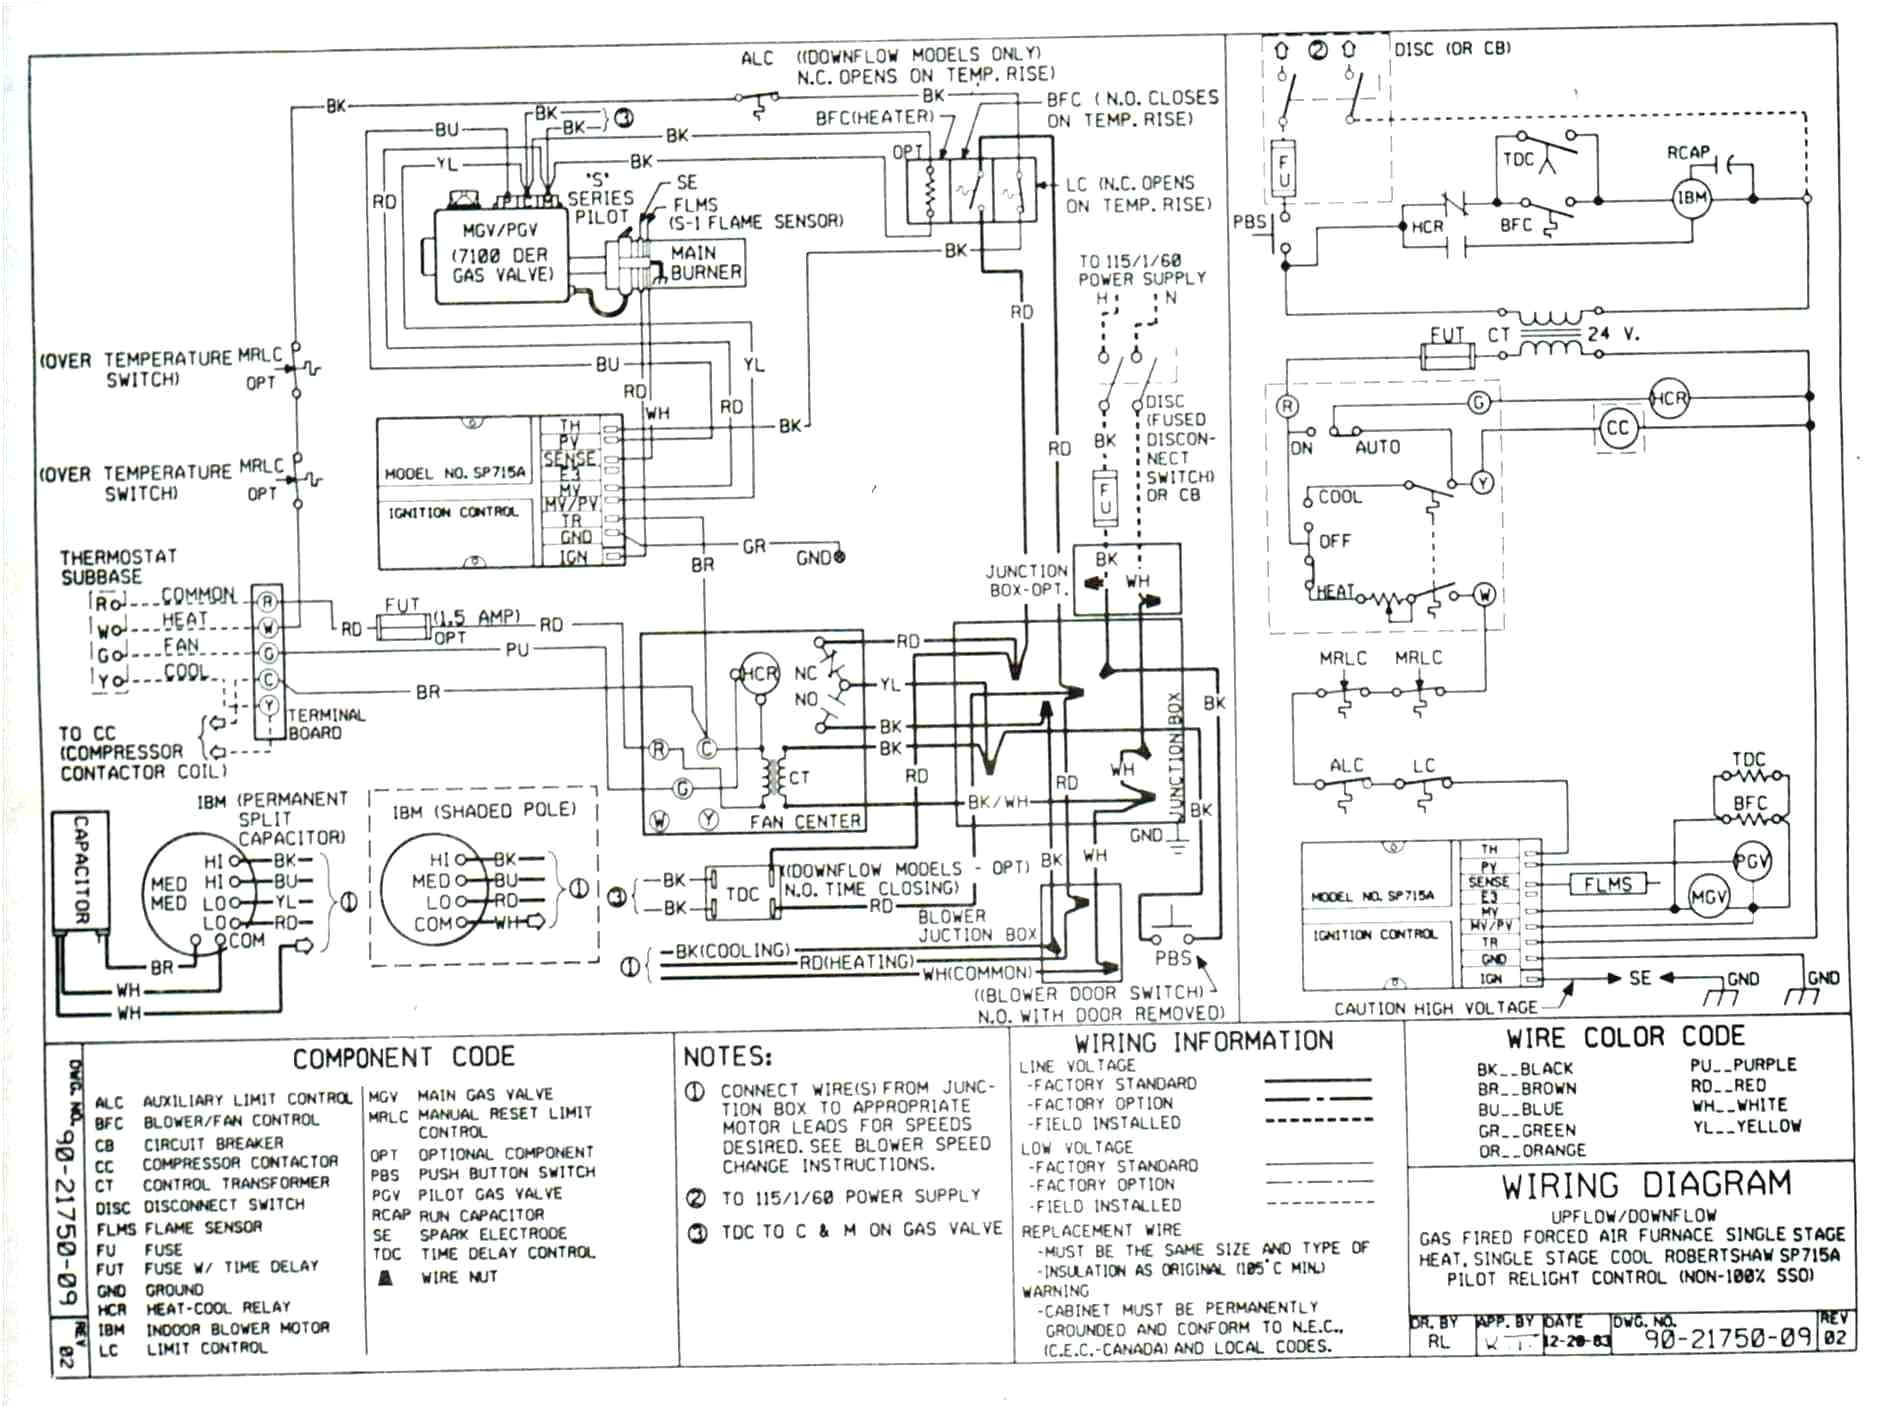 gordon piatt wiring diagram inspirational go power flame burners wiring diagrams library wiring diagrams